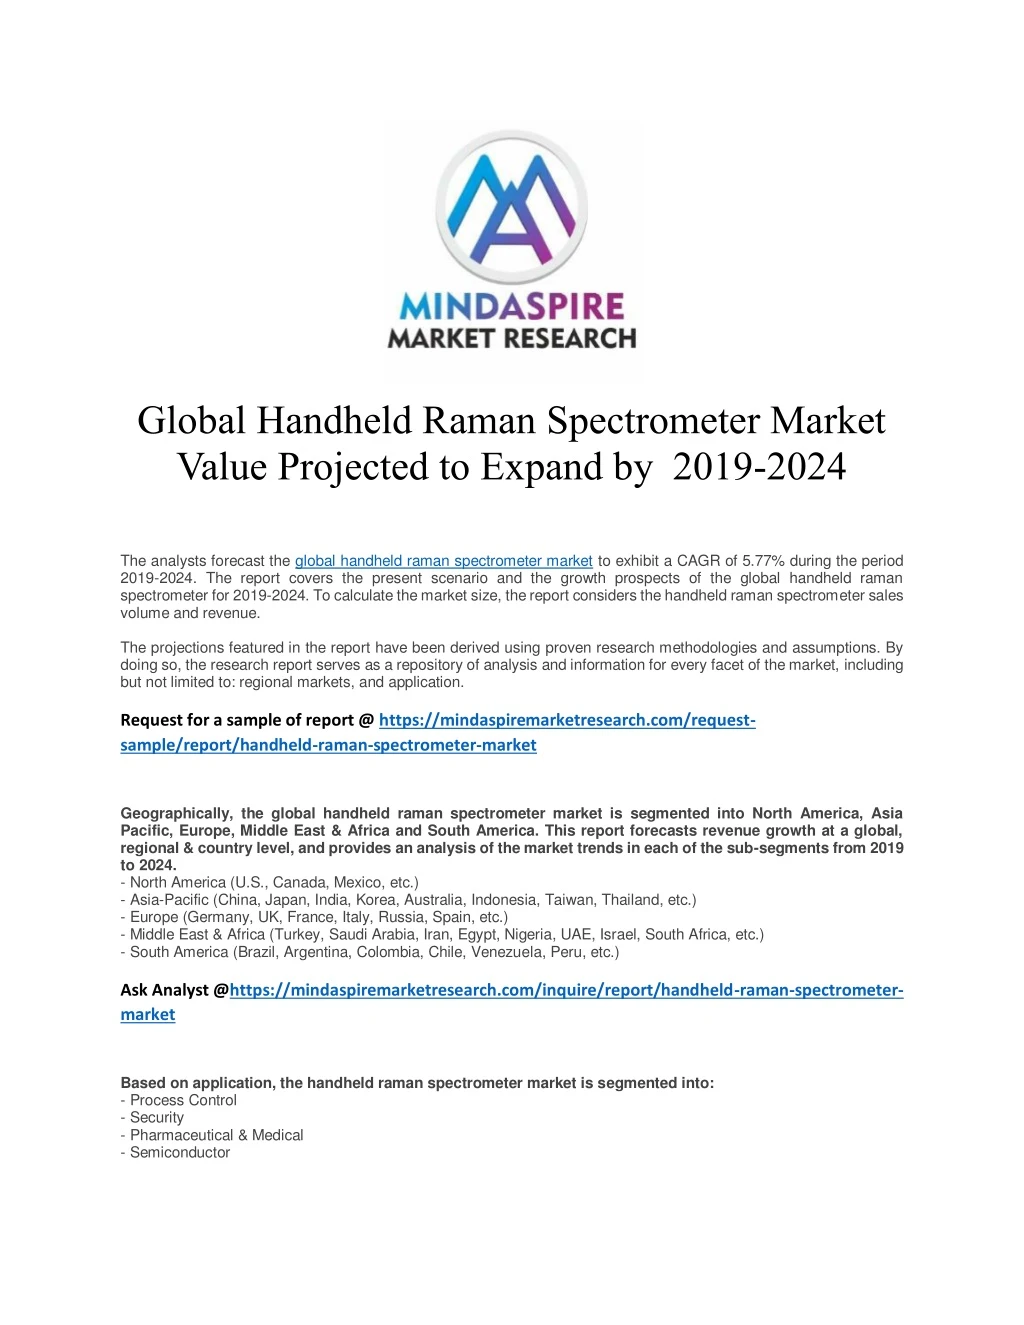 global handheld raman spectrometer market value